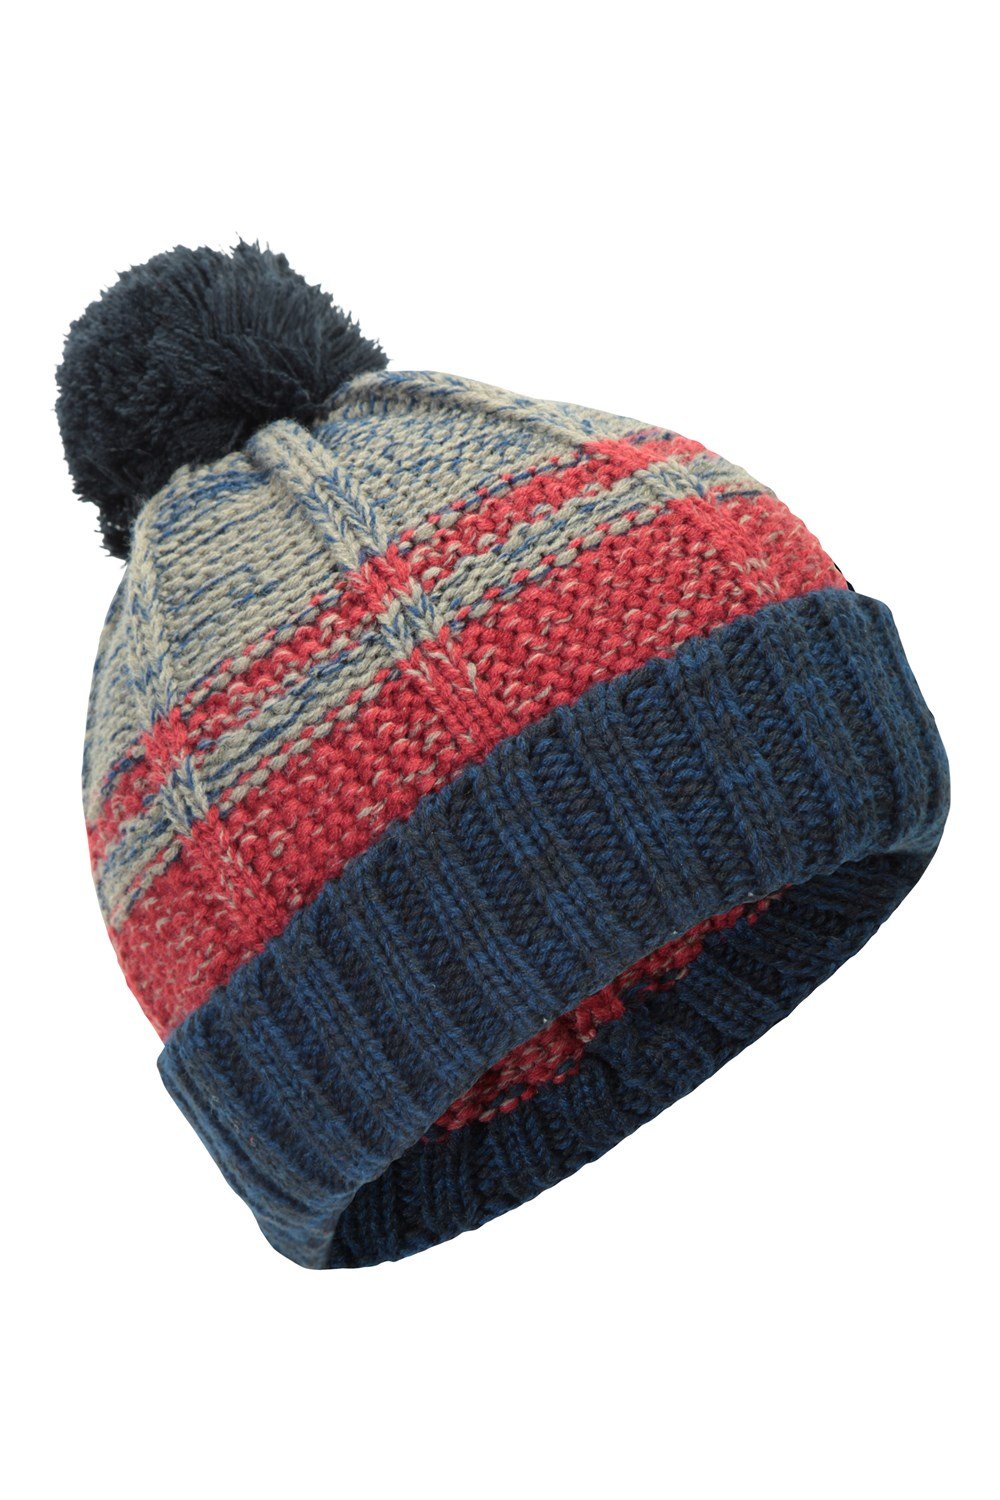 Stripe Cable Knit Bobble Hat | eBay